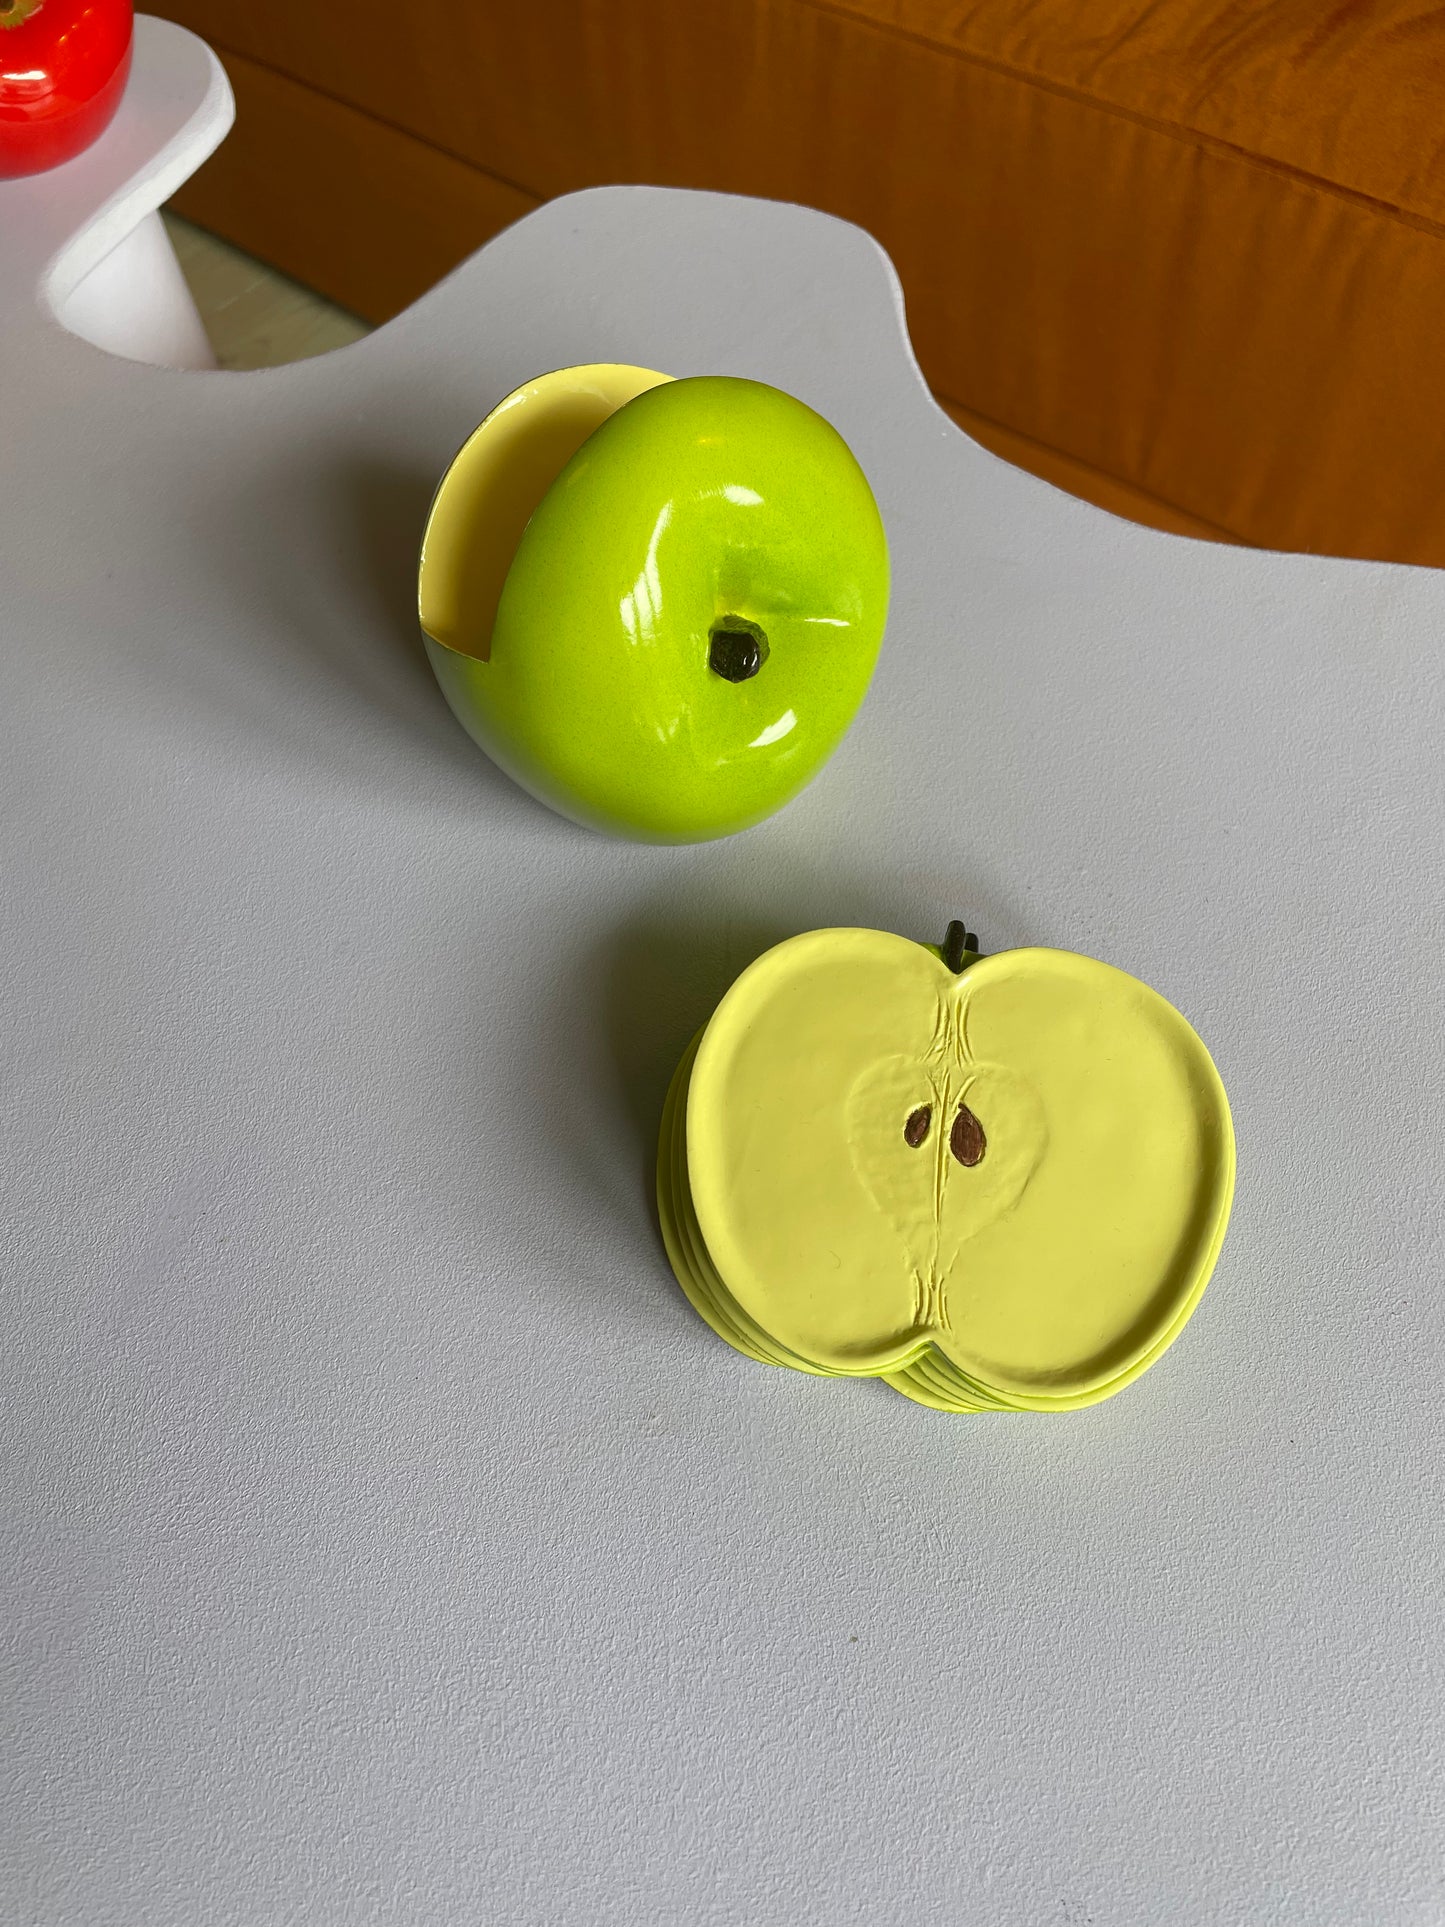 Grønne æble bordskånere